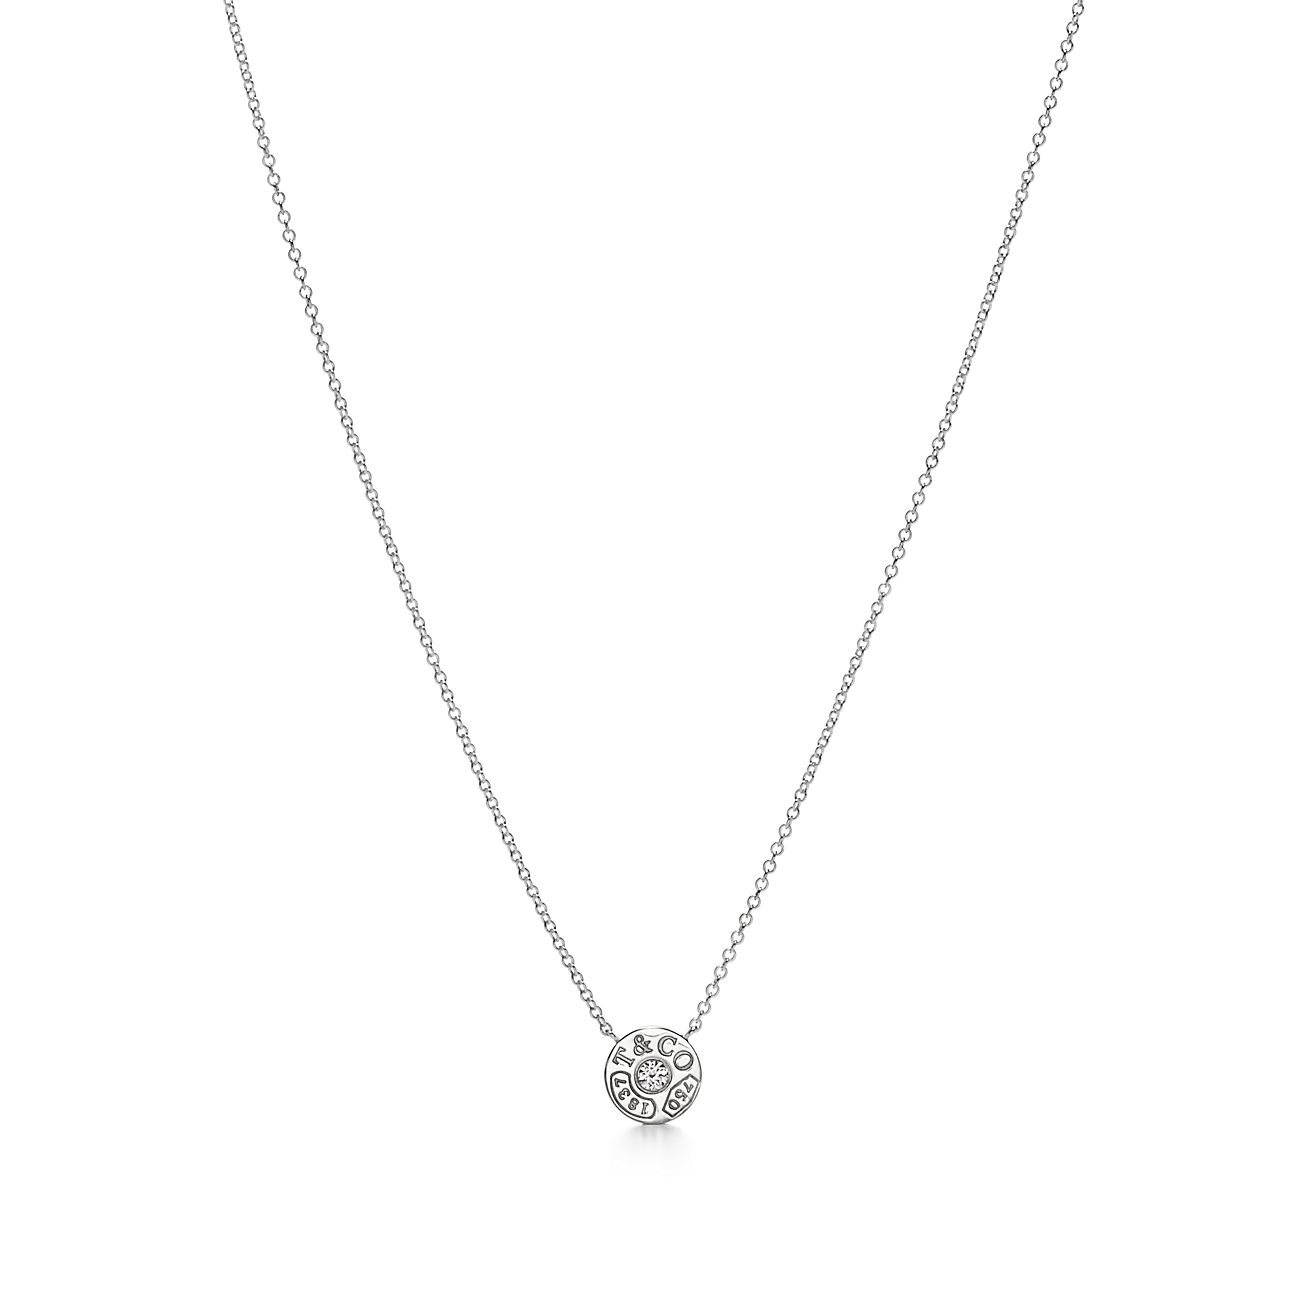 Tiffany Soleste® pendant in 18k rose gold with diamonds. | Tiffany & Co.